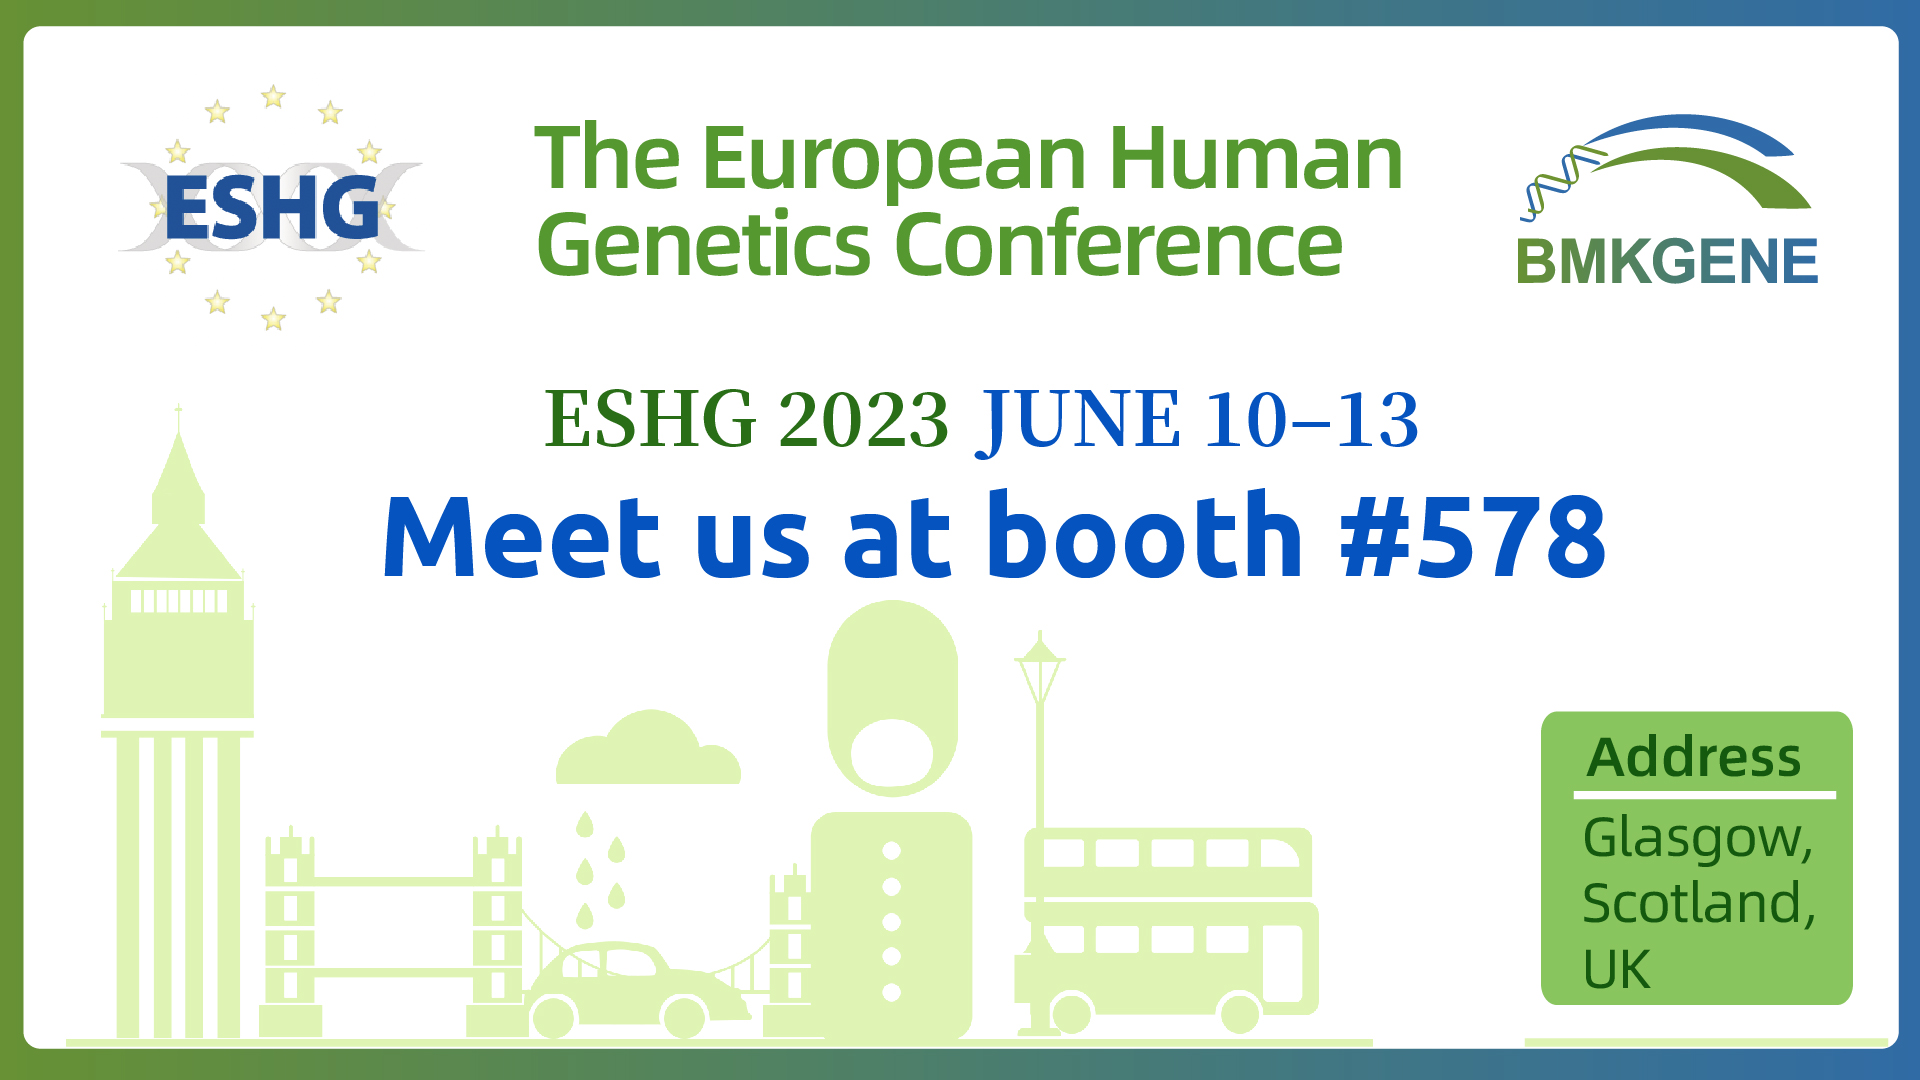 ESHG 2023 —The European Human Genetics Conference